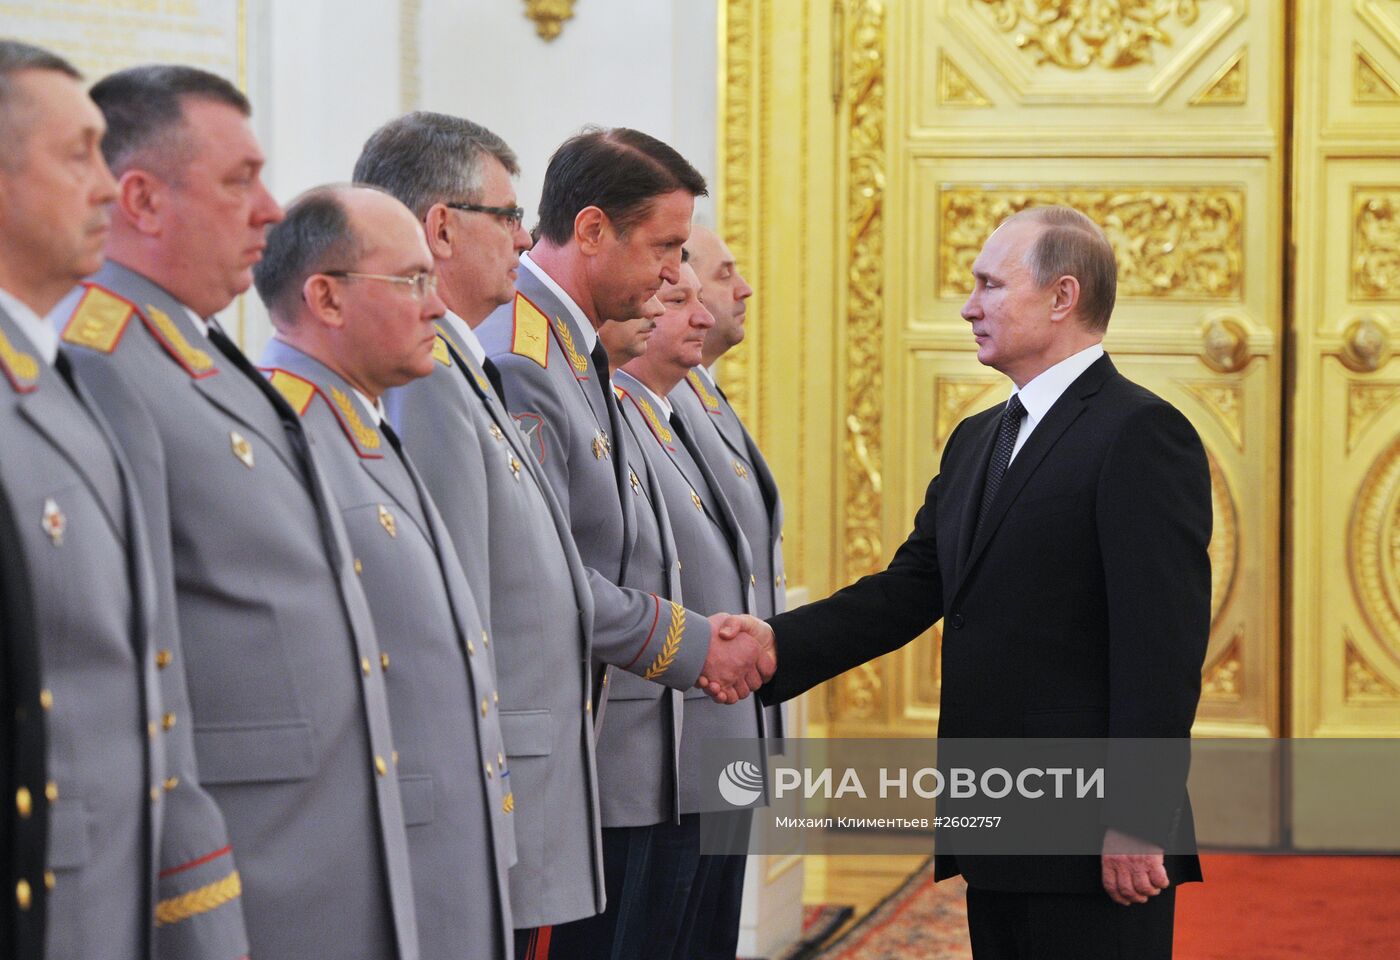 Встреча президента РФ В.Путина с высшими офицерами и прокурорами в Кремле